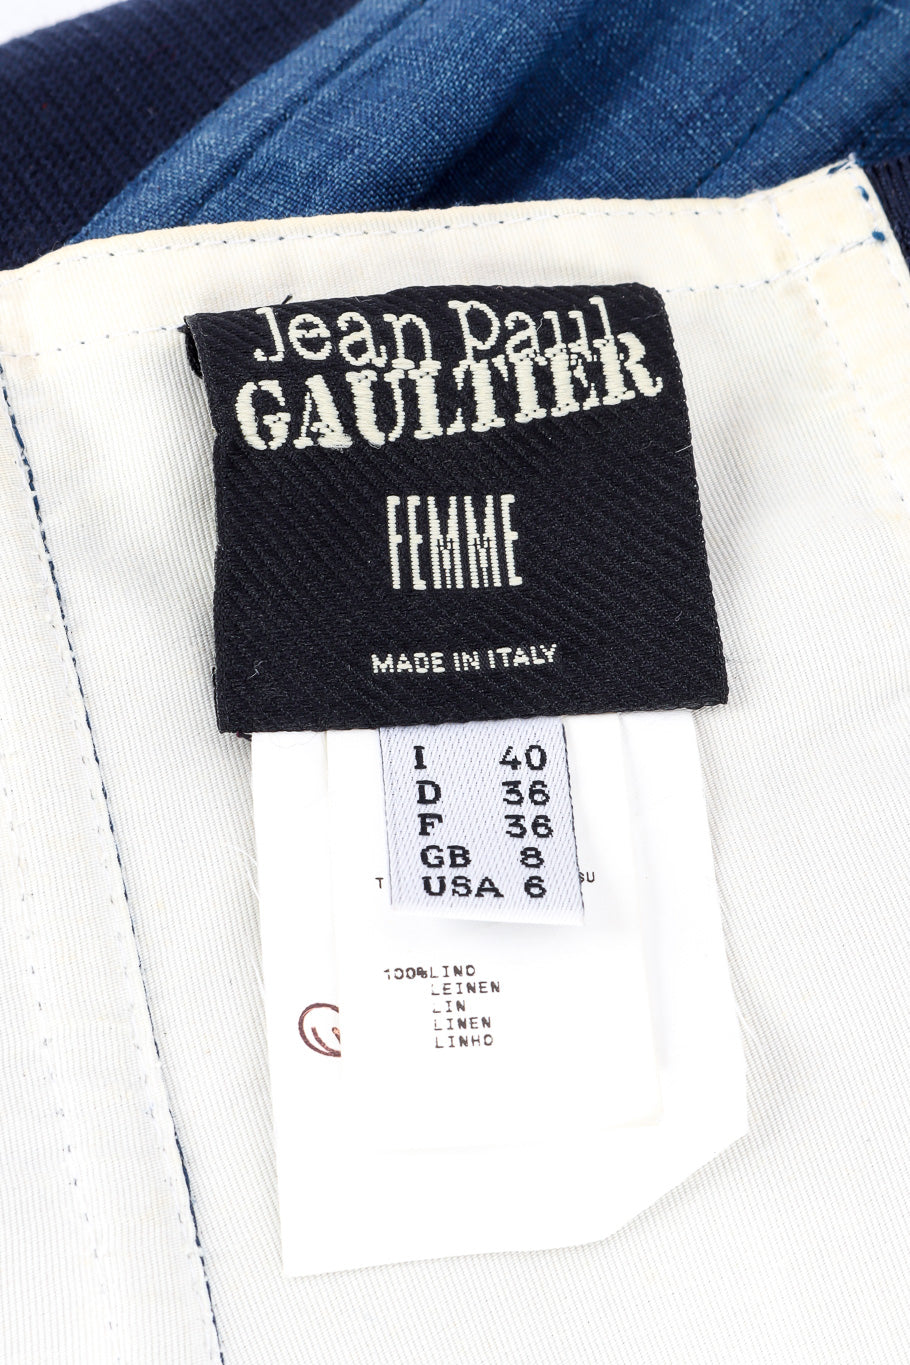 Pleated corset skirt by Jean Paul Gaultier flat lay label @recessla